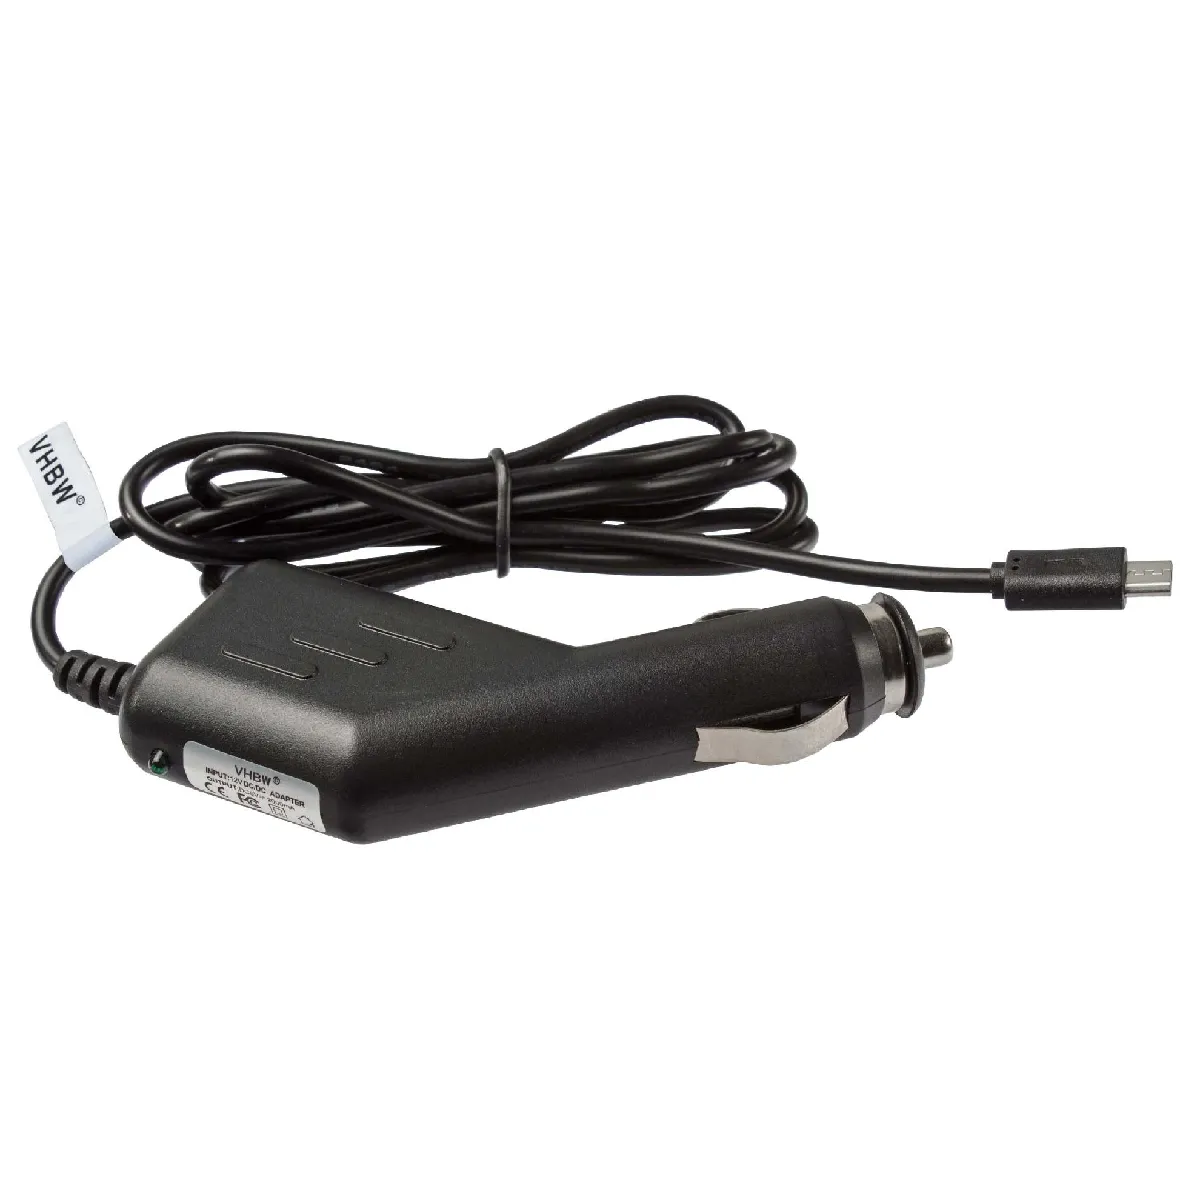 Chargeur allume-cigares (2A) avec Micro-USB pour Acer beTouch E110 E120 E130 E310 E320 E400 Liquid Metal Stream NeoTouch P300, P400